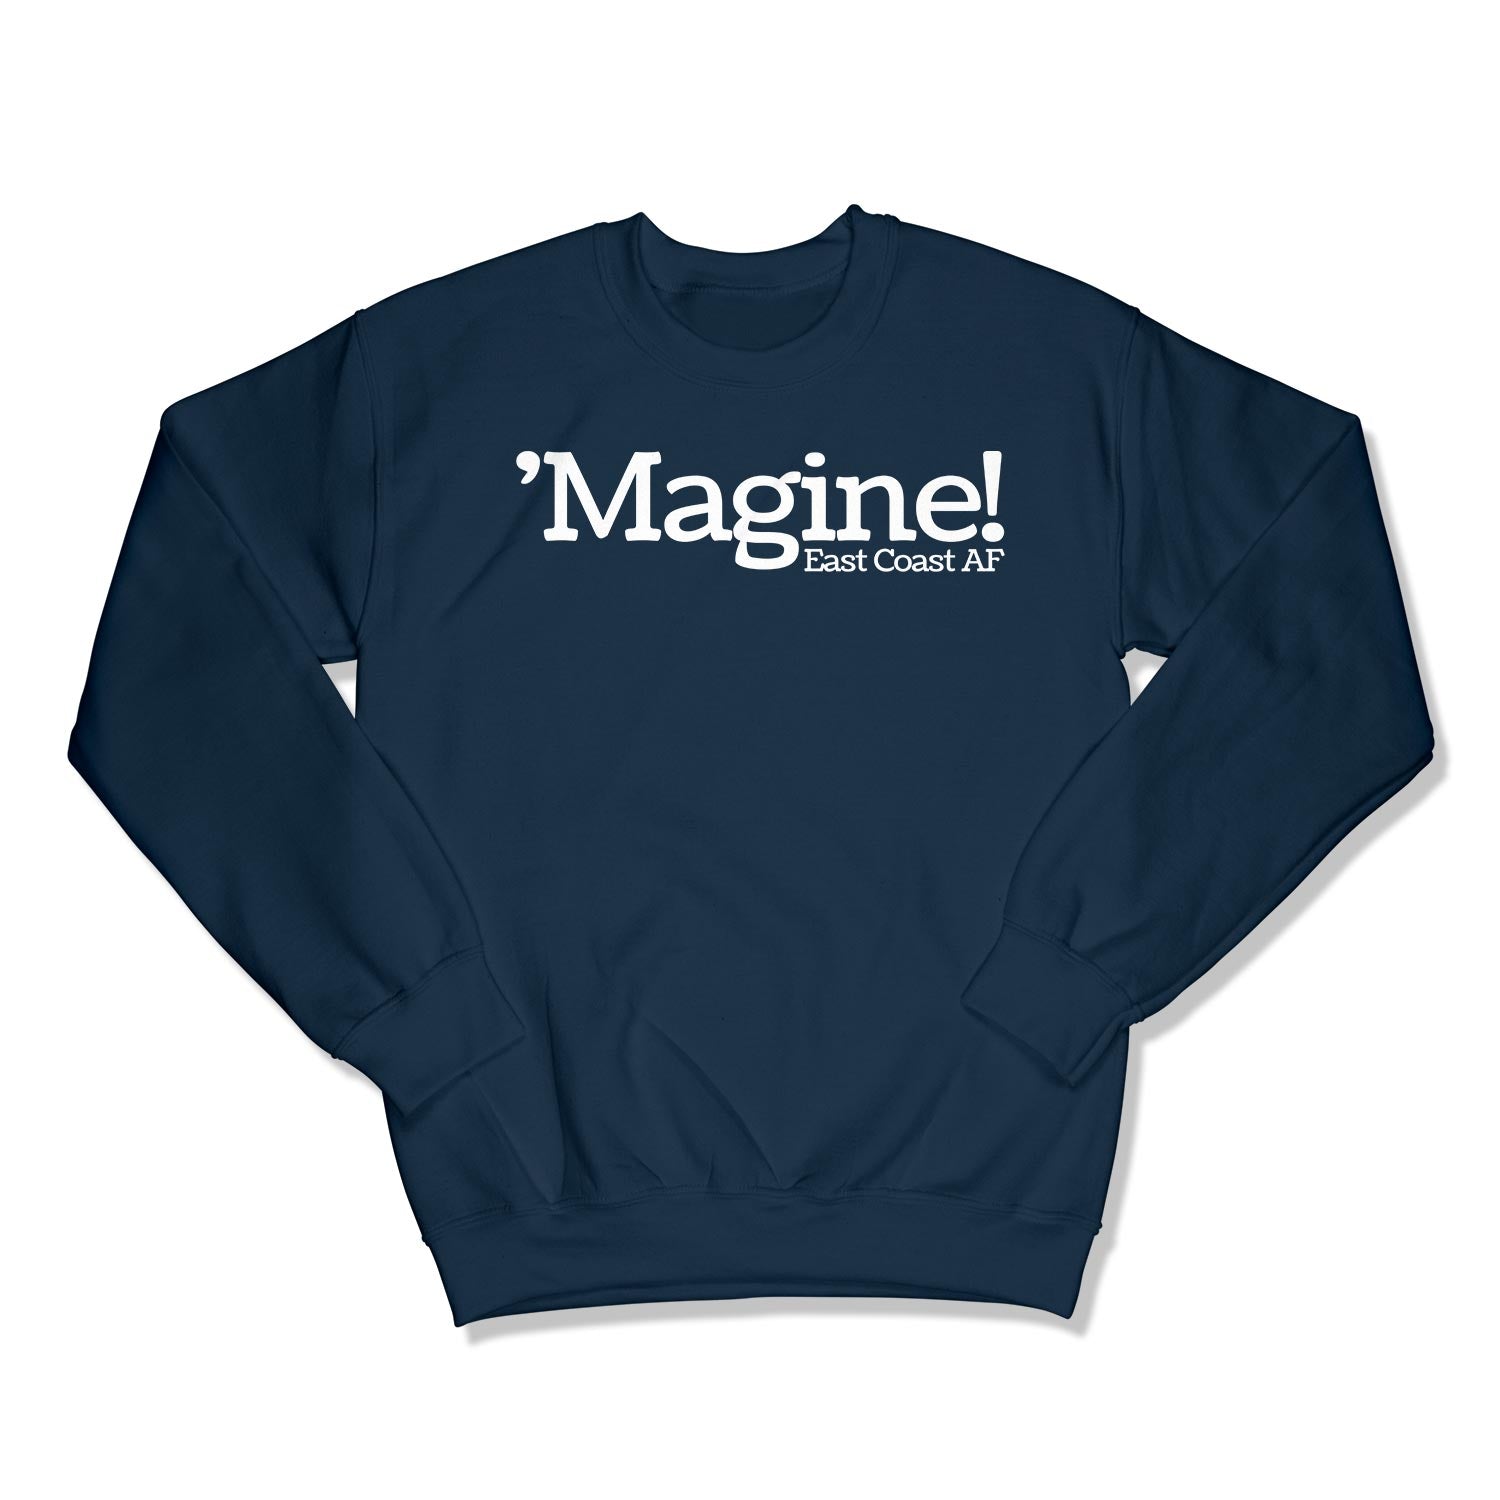 'Magine! Unisex Crewneck Sweatshirt in Color: Navy - East Coast AF Apparel